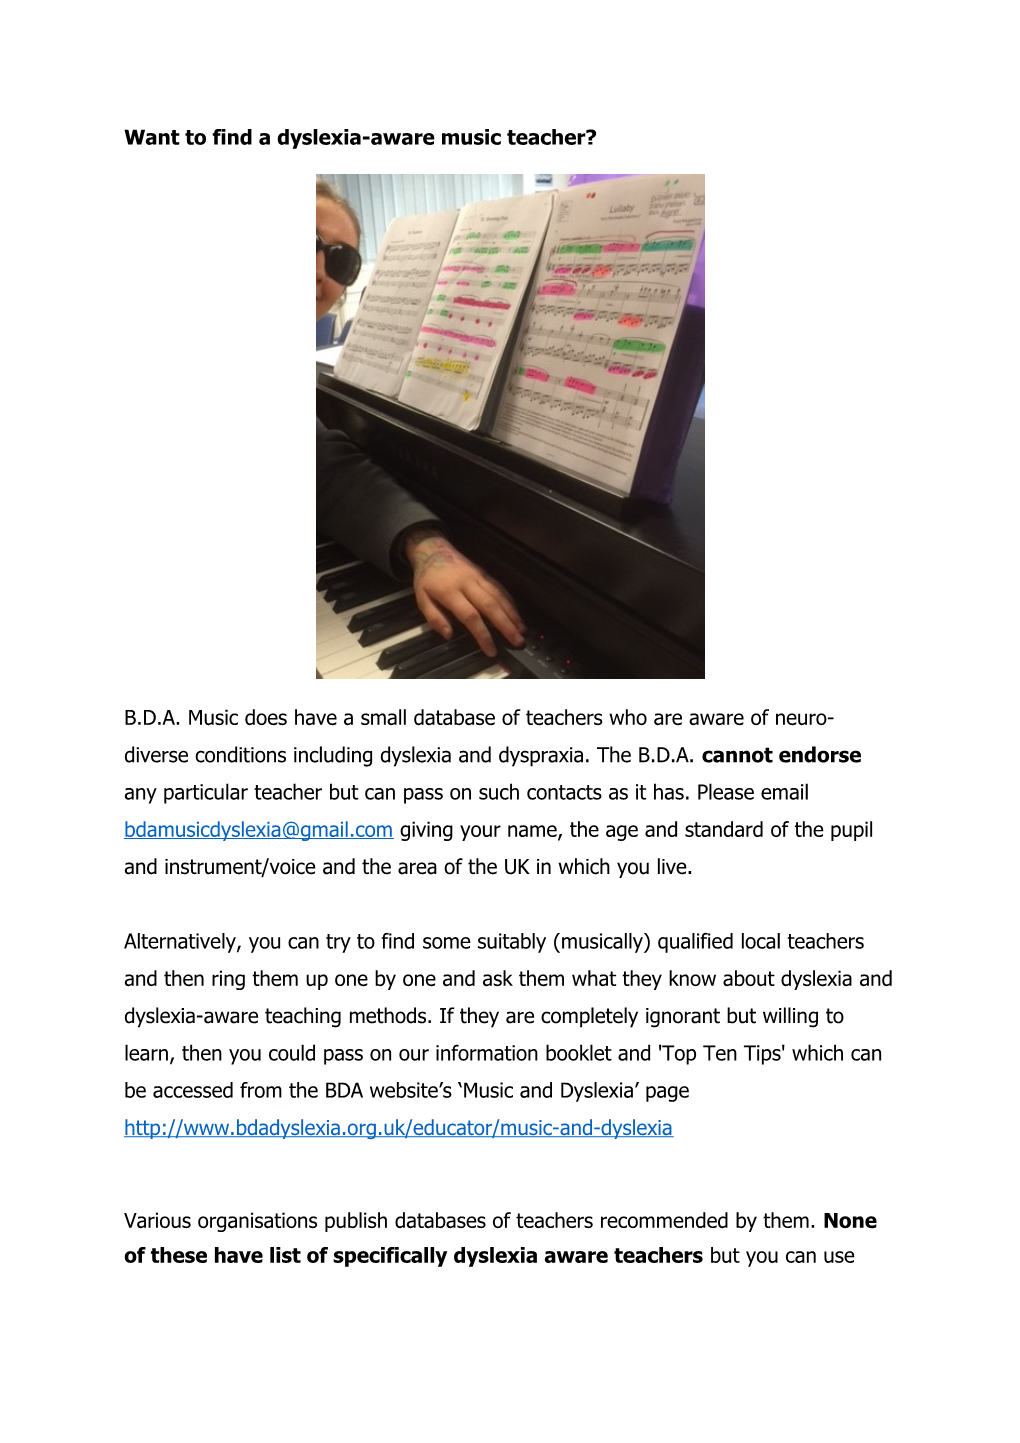 Want to Find a Dyslexia-Aware Music Teacher?